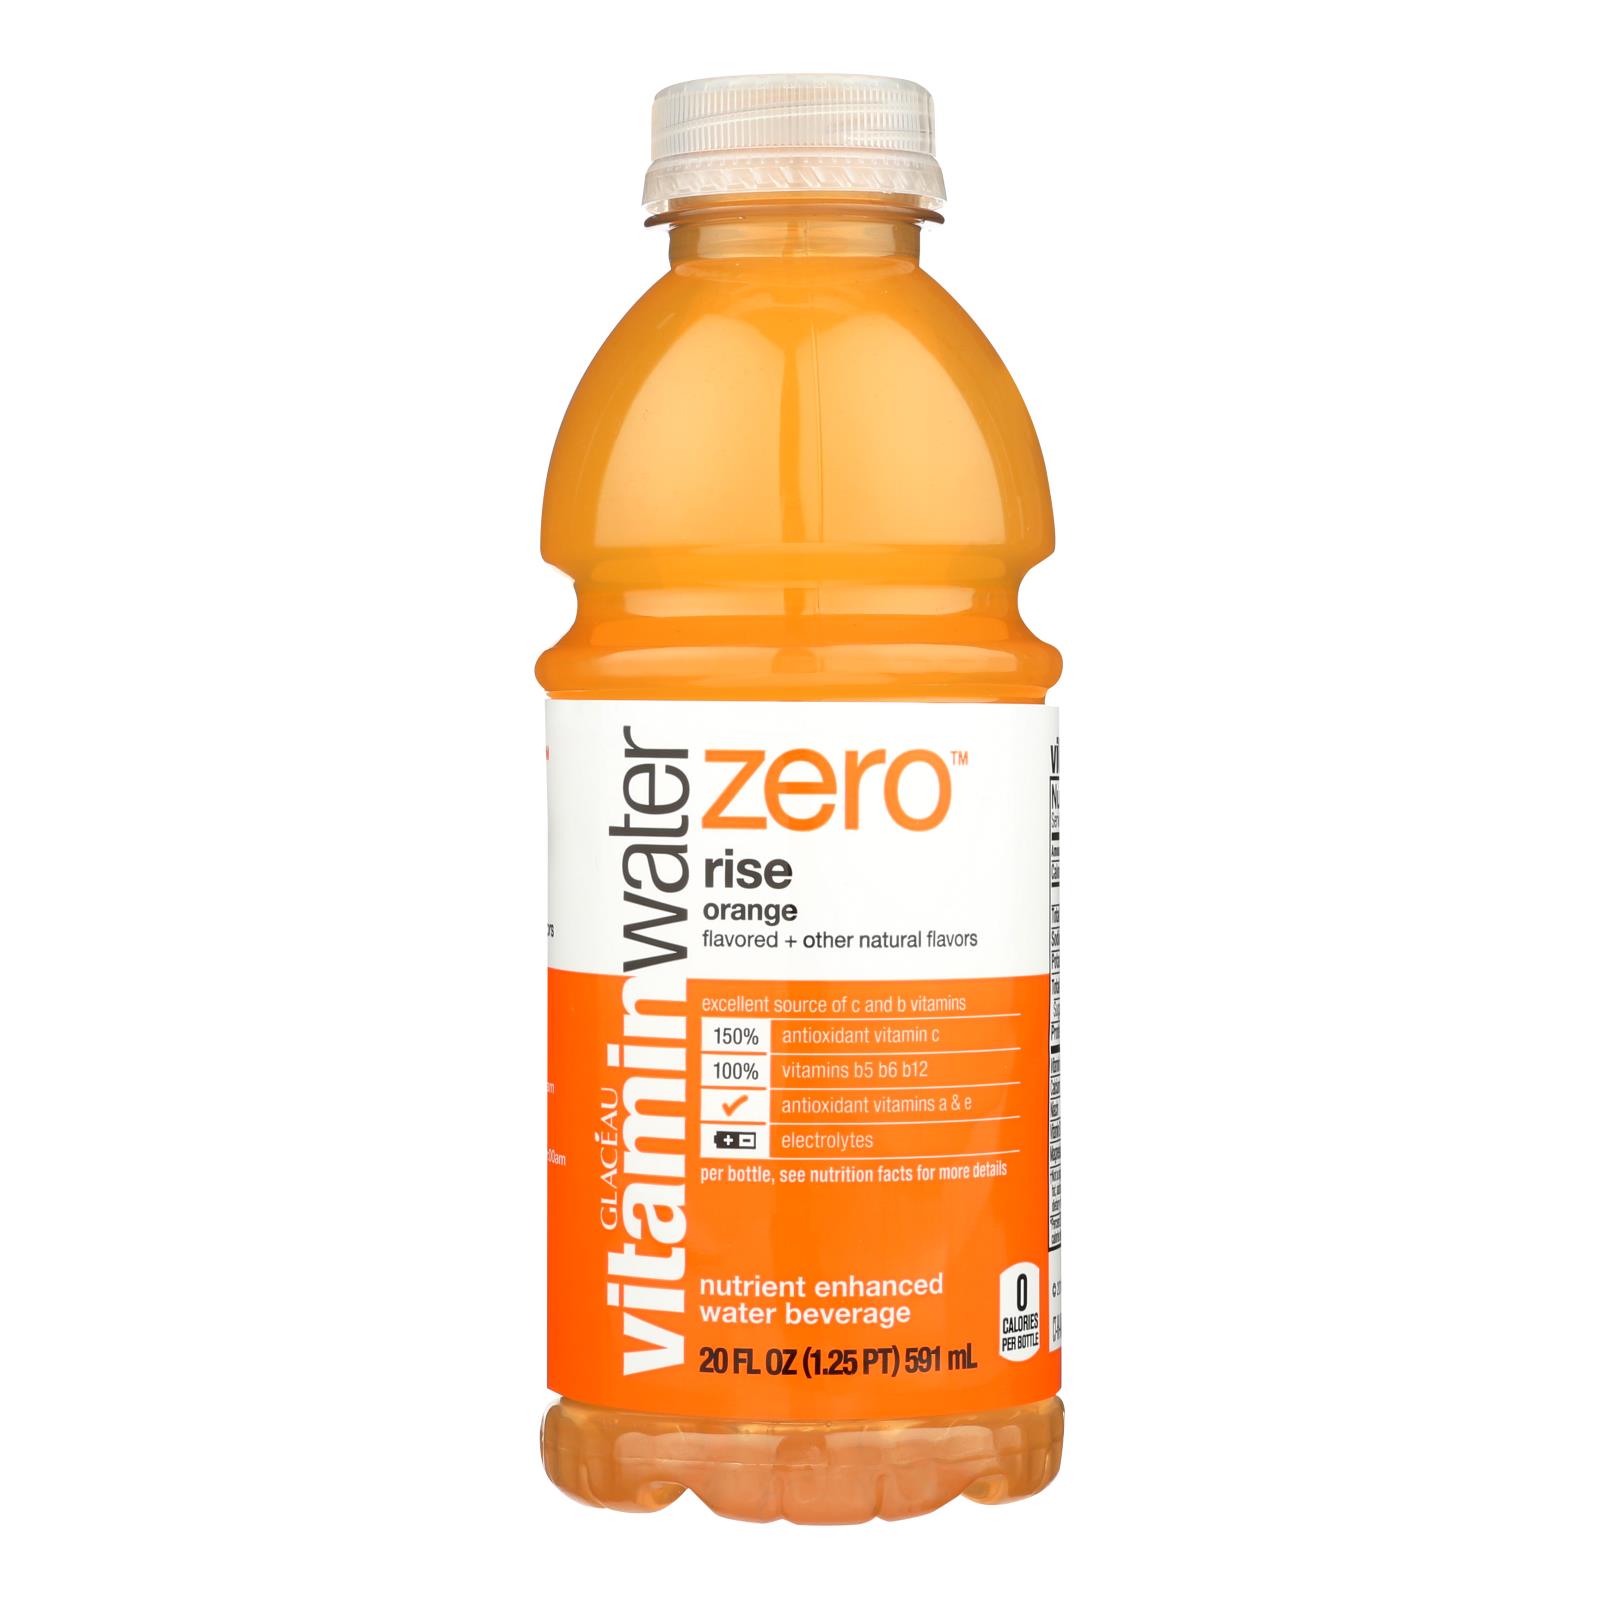 Glaceau Vitamin Water Zero, Rise Orange - 12개 묶음상품 - 20 FZ